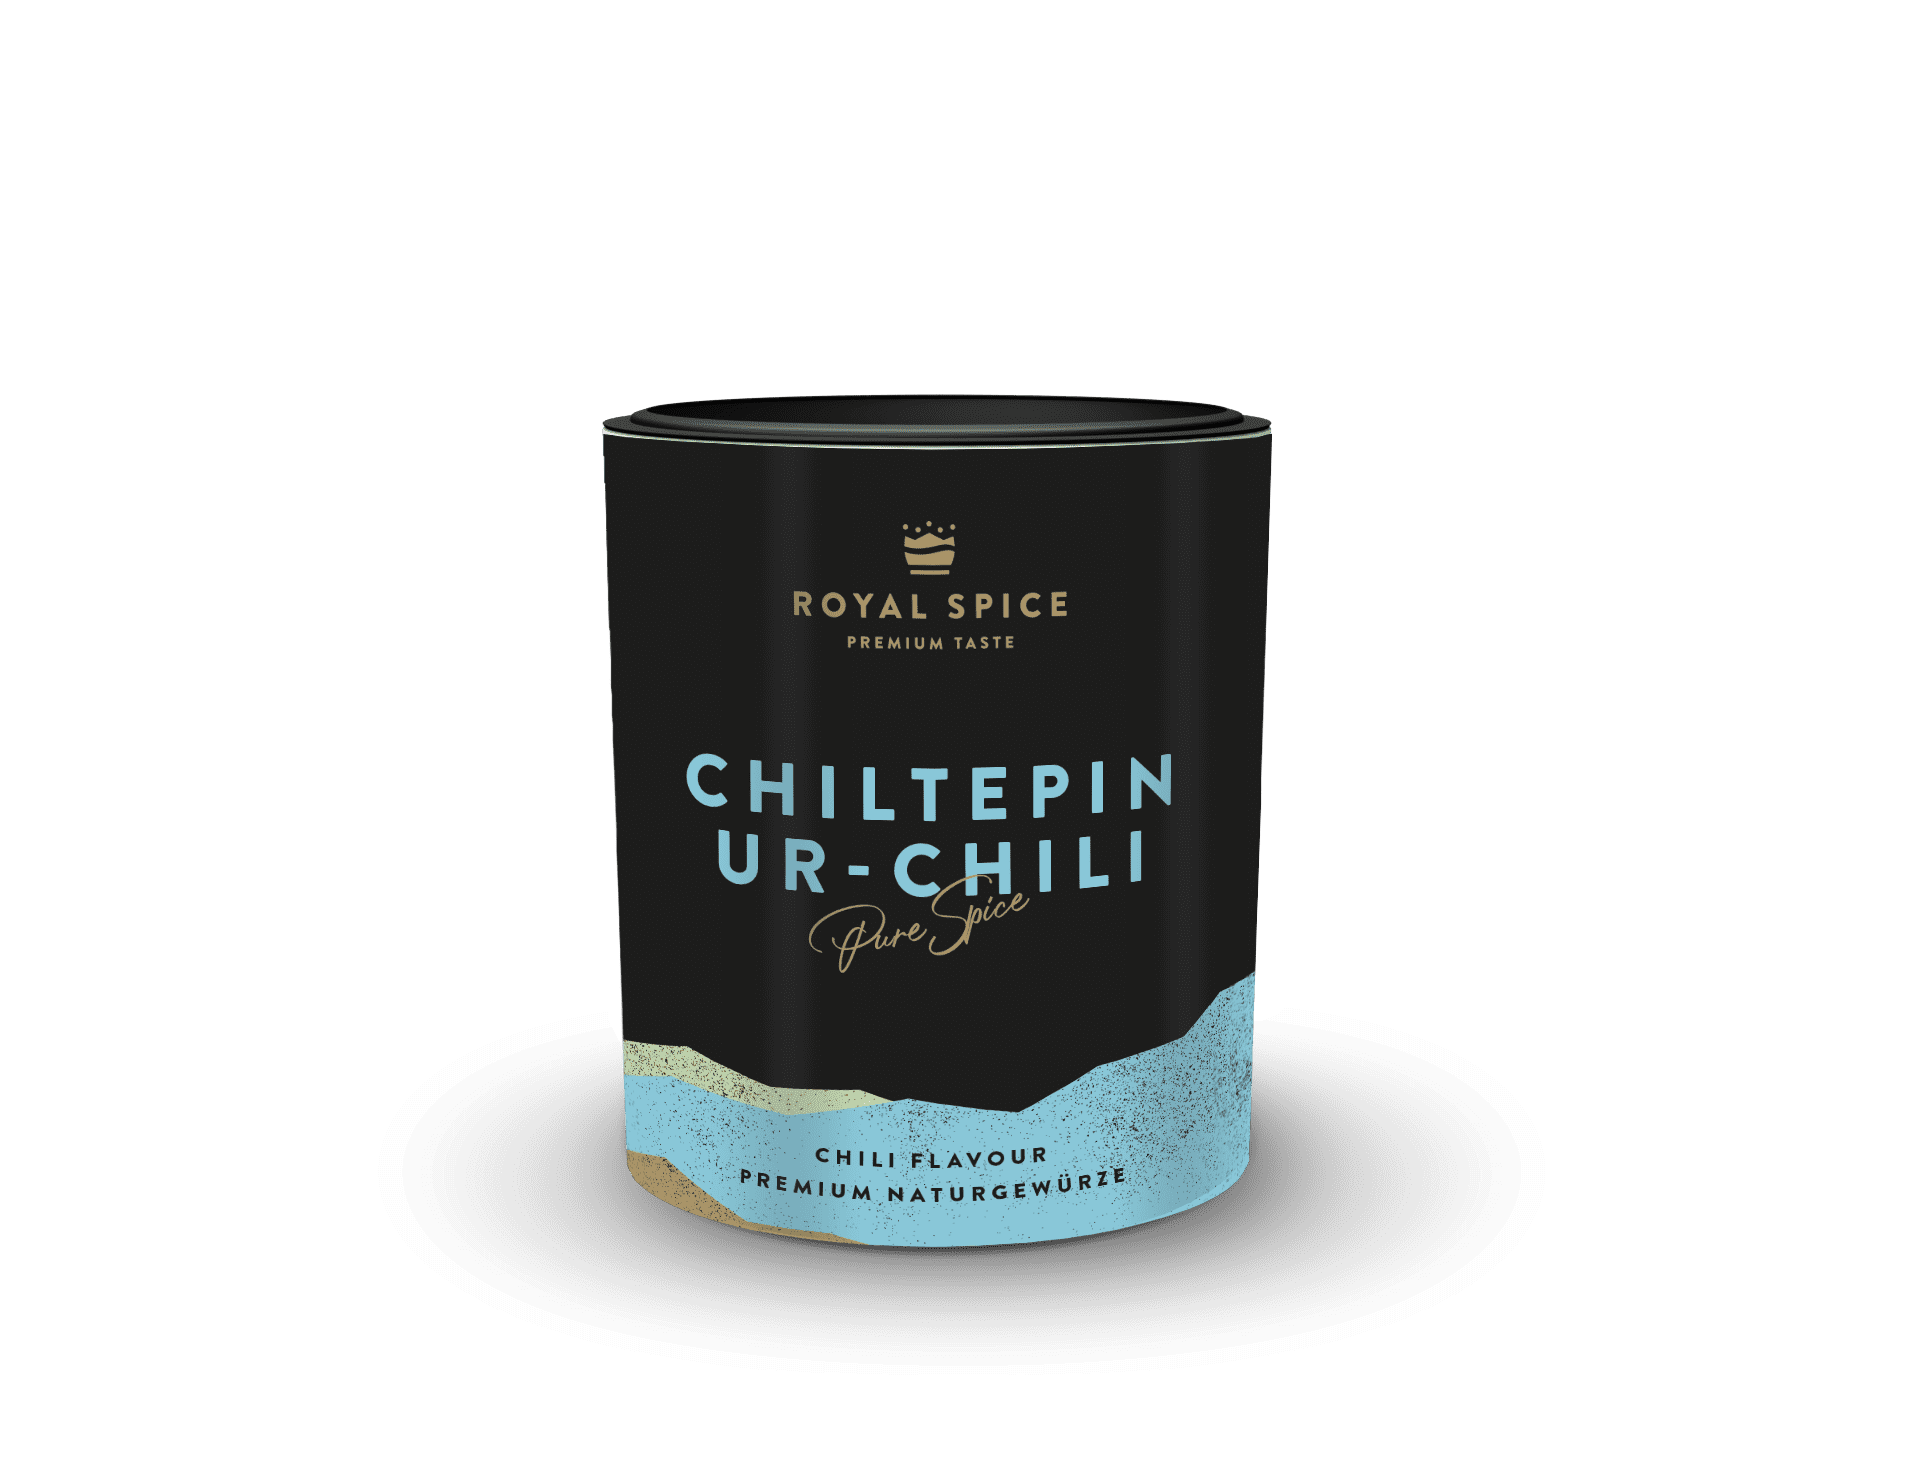 Chiltepin Ur-Chili